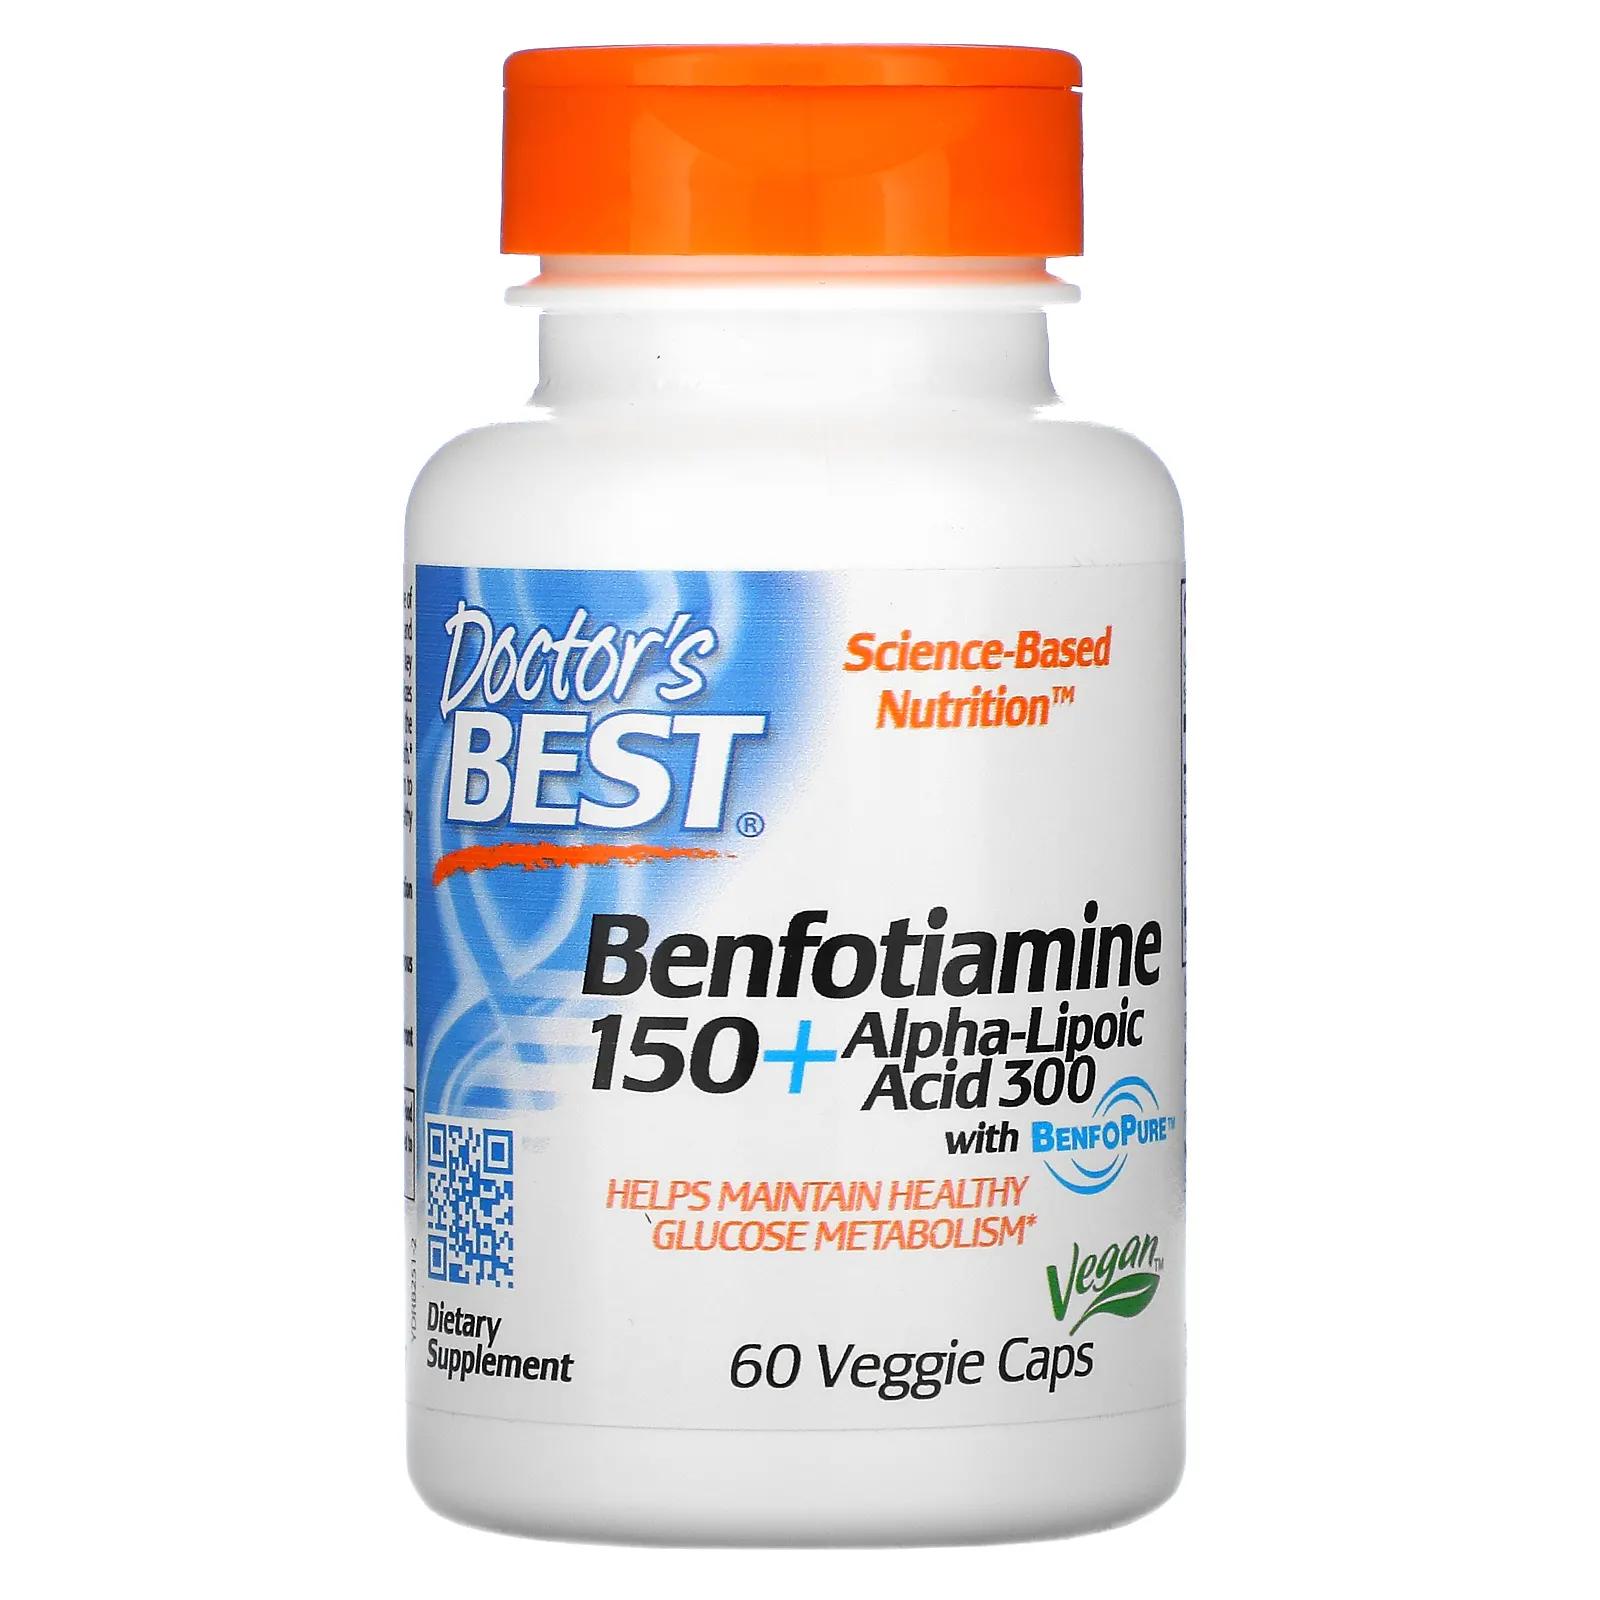 Doctor's Best Benfotiamine 150 + Alpha-Lipoic Acid 300 with BenfoPure 60 Veggie Caps